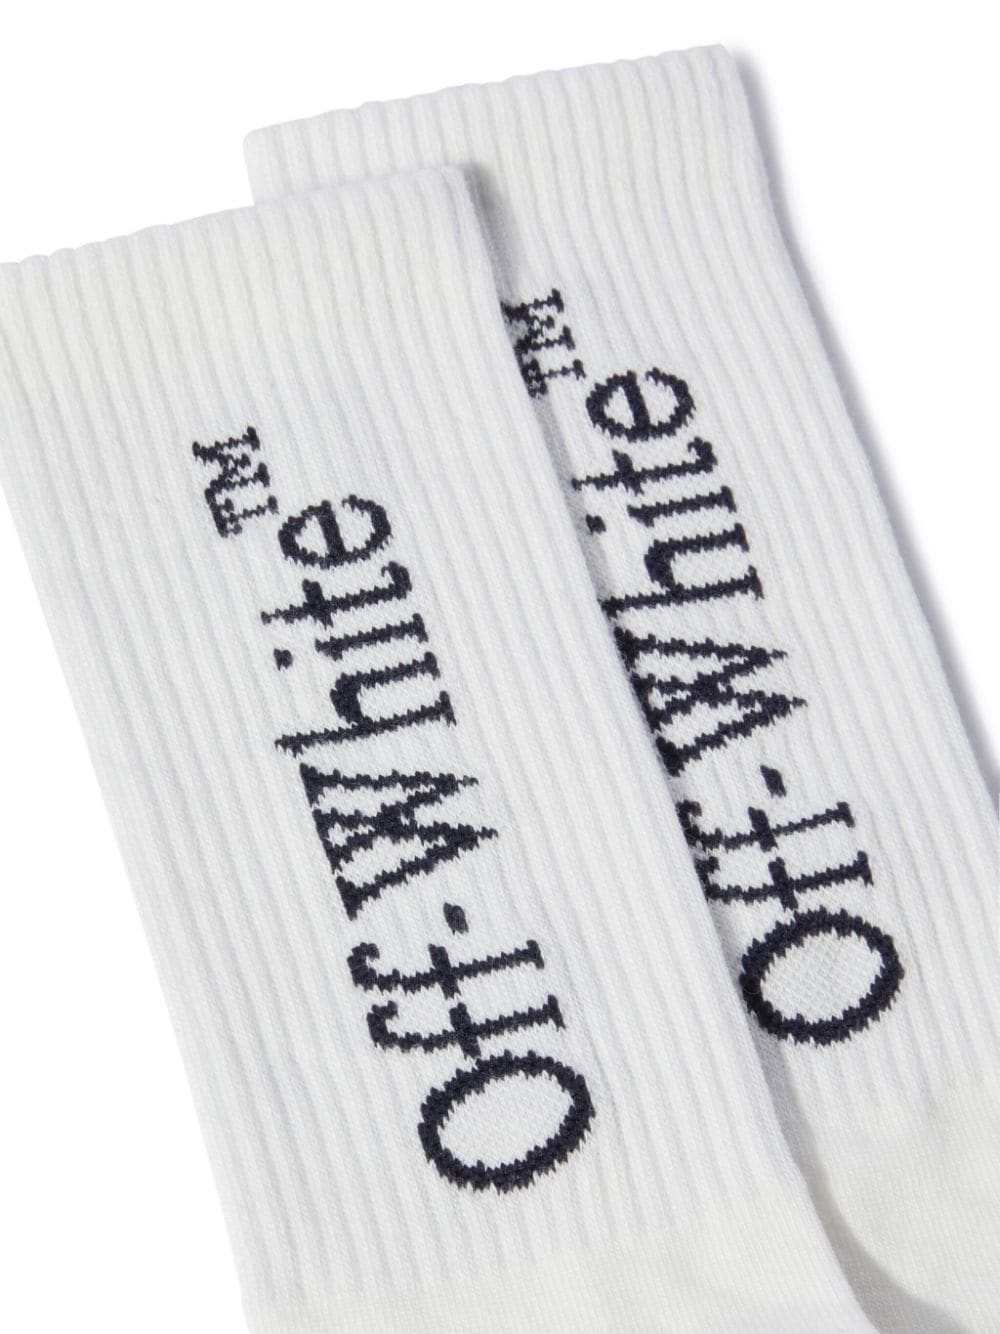 White cotton blend children's socks